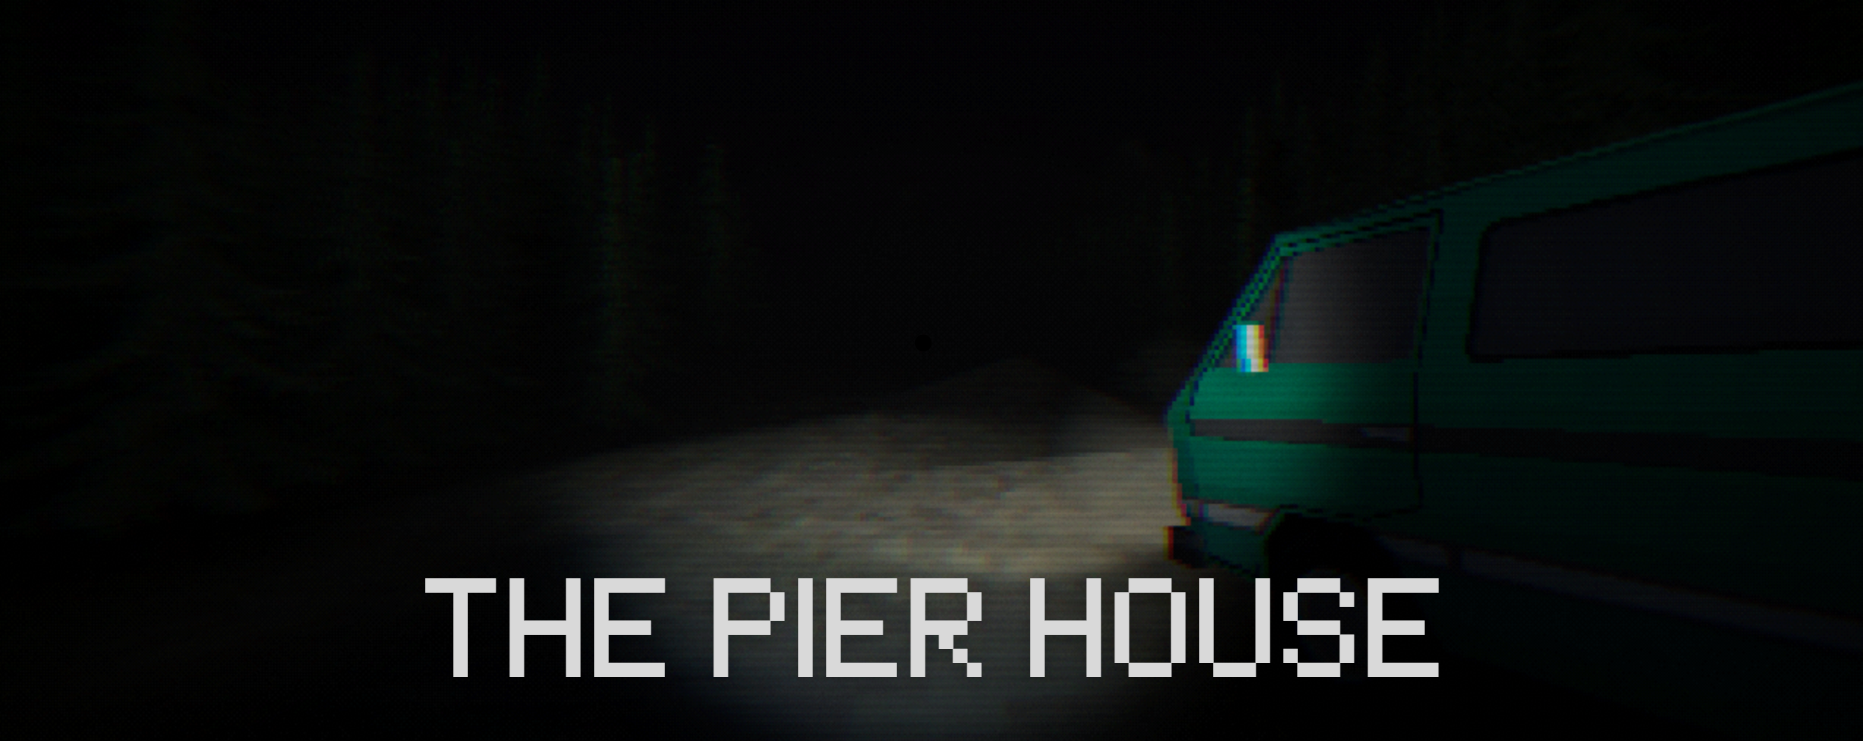 The Pier House - Episode 1